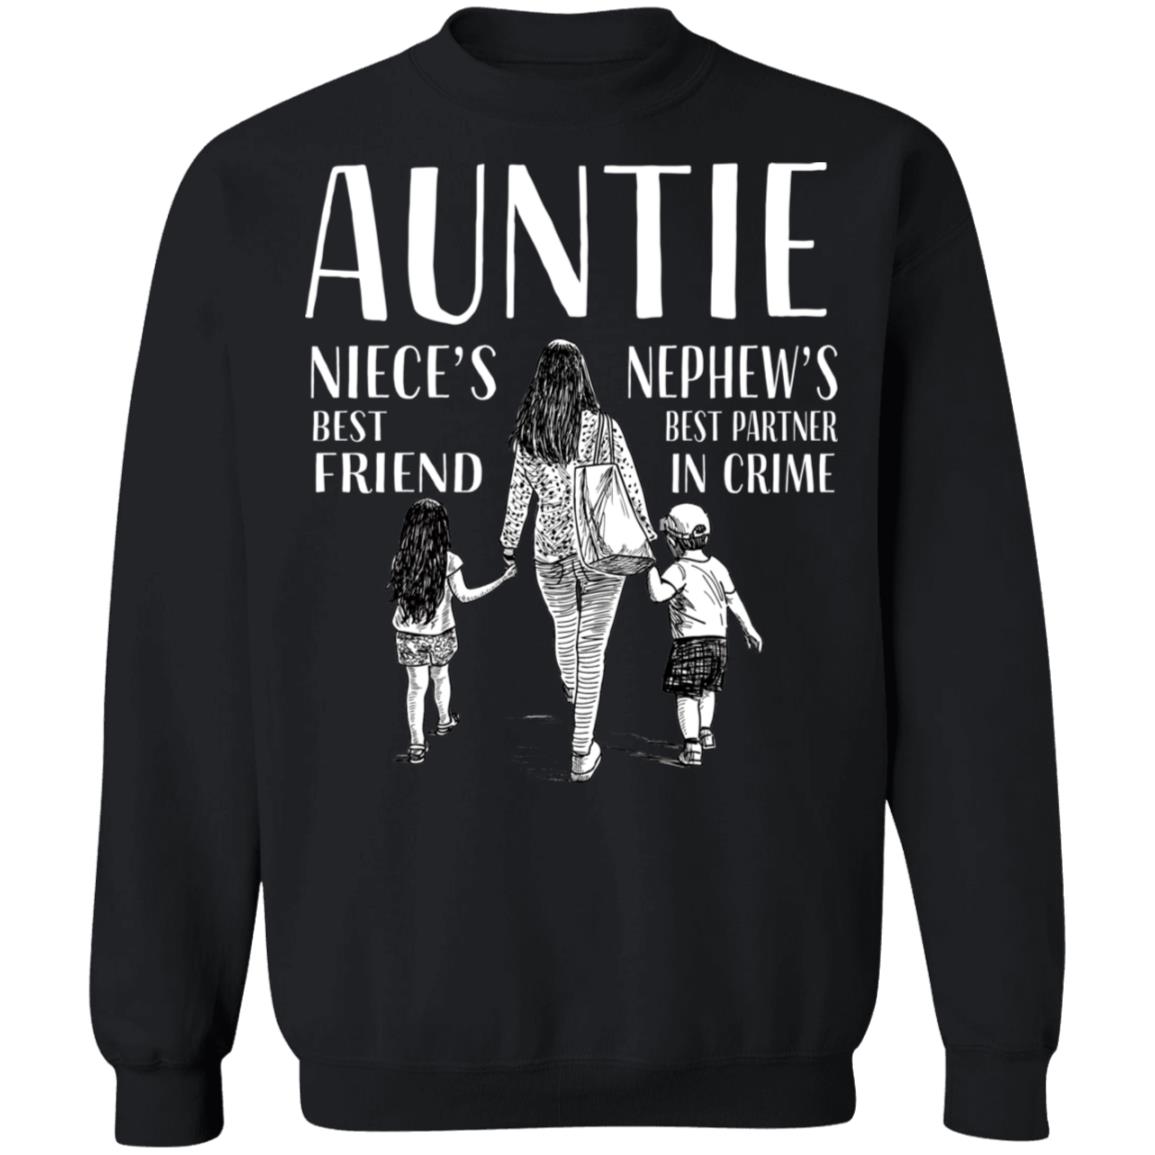 Auntie Best Friend of Niece and Best Partner in Crime of Nephew Crewneck Pullover Sweatshirt